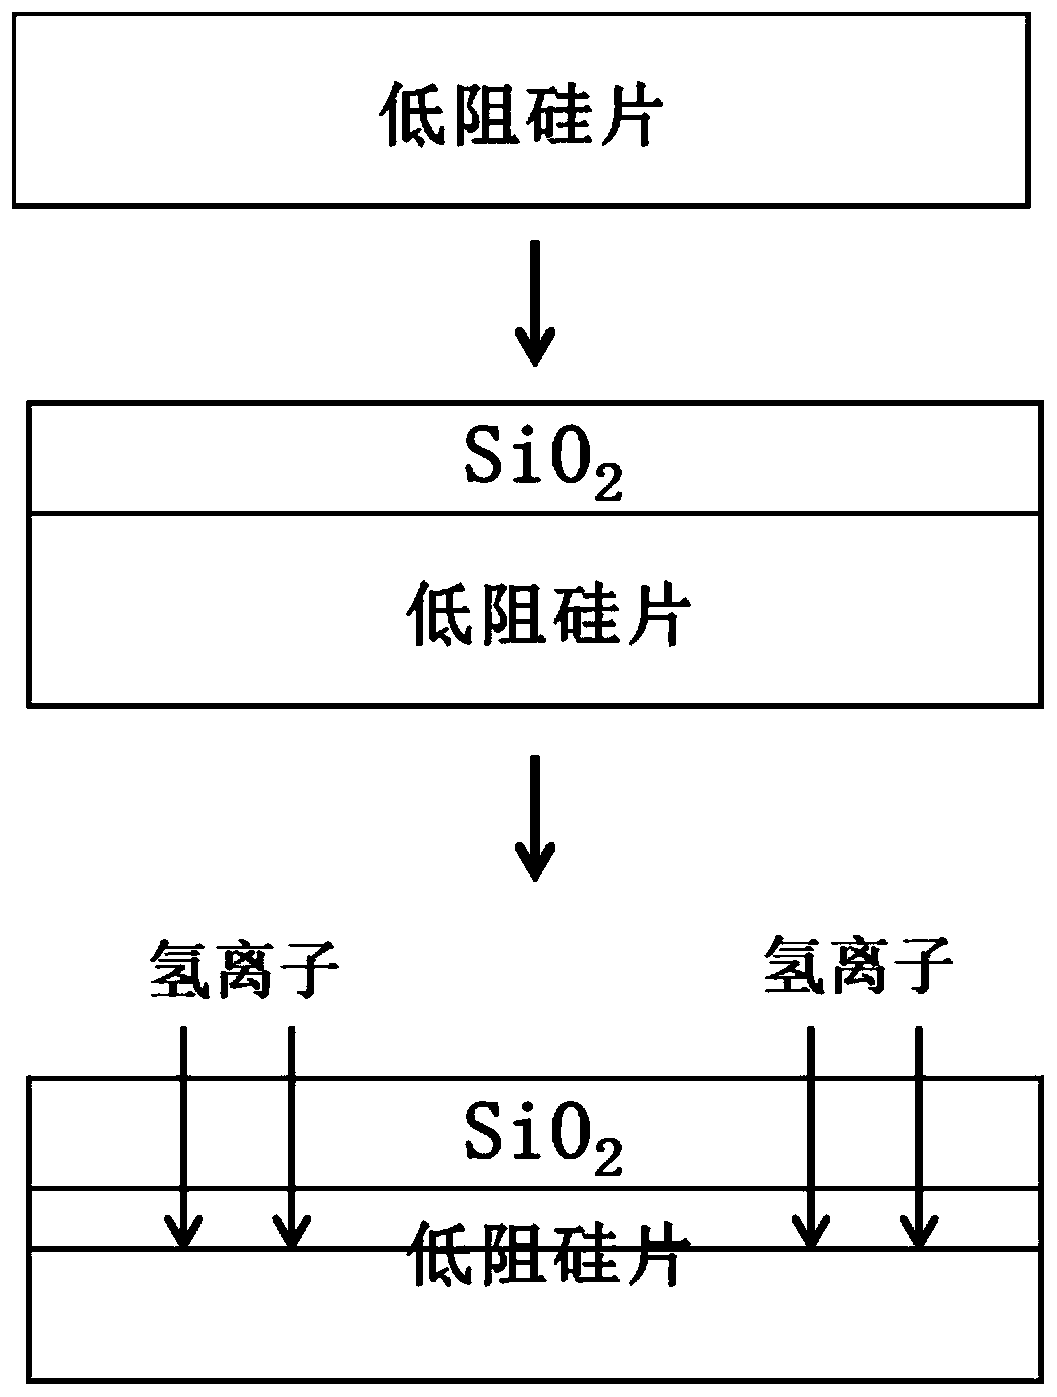 Preparation method of SOI wafer